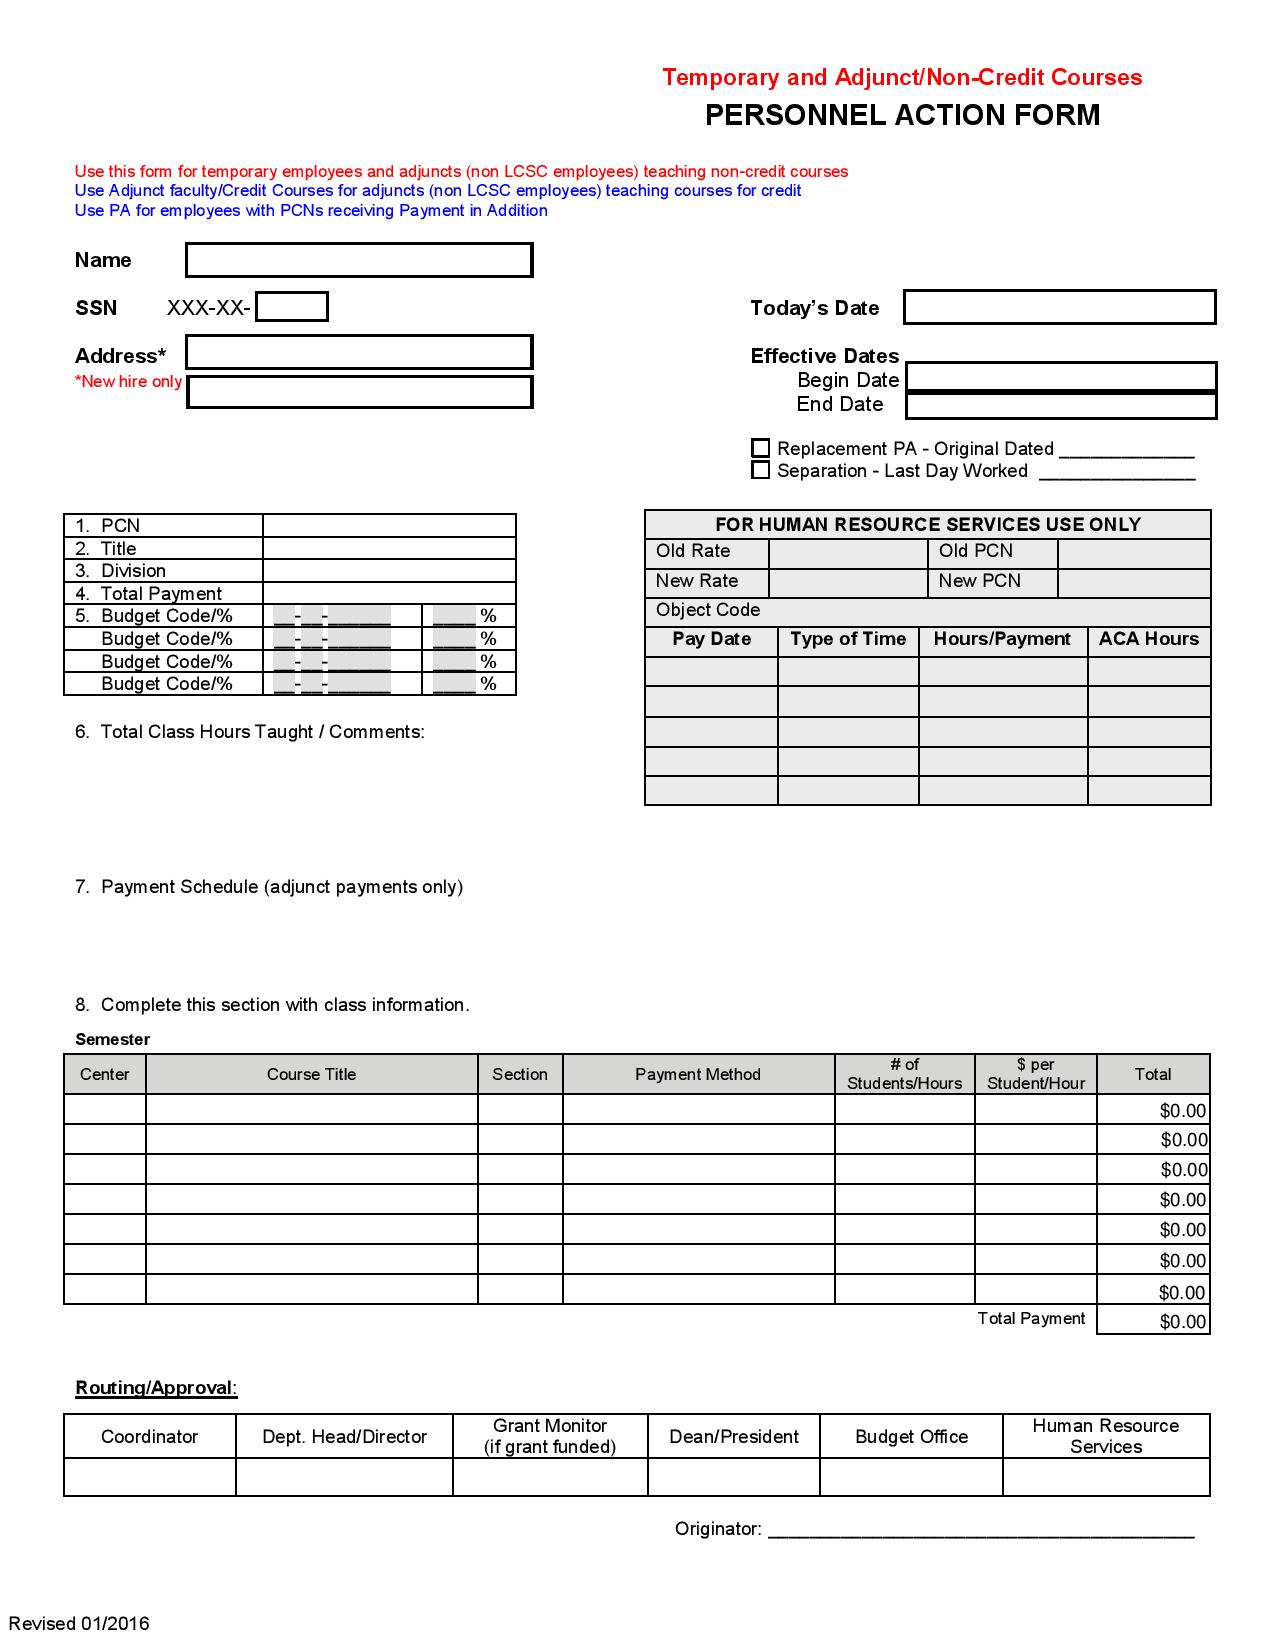 personnel action form non credit courses page 001